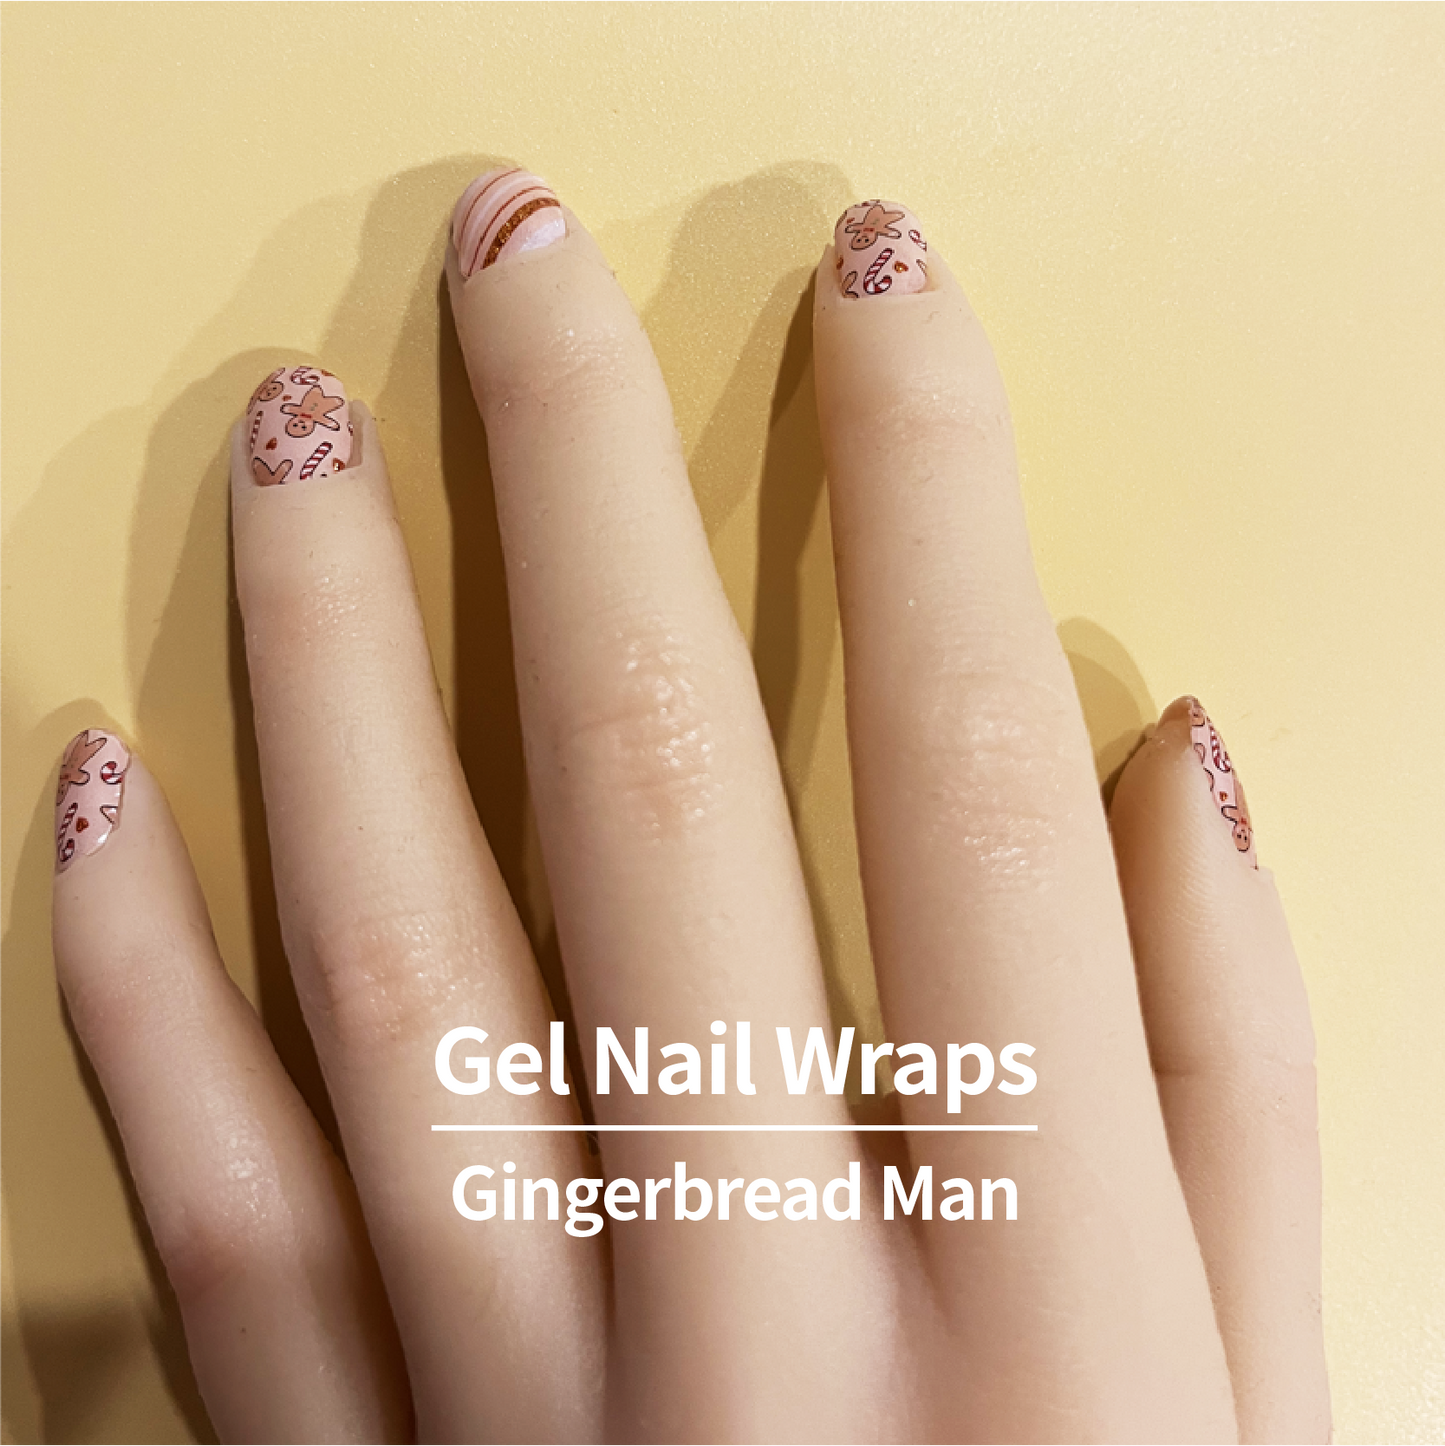 COLOURFULSHARK Nail Artist / Semi-Cured Gel Nail Wraps /Gingerbread Man